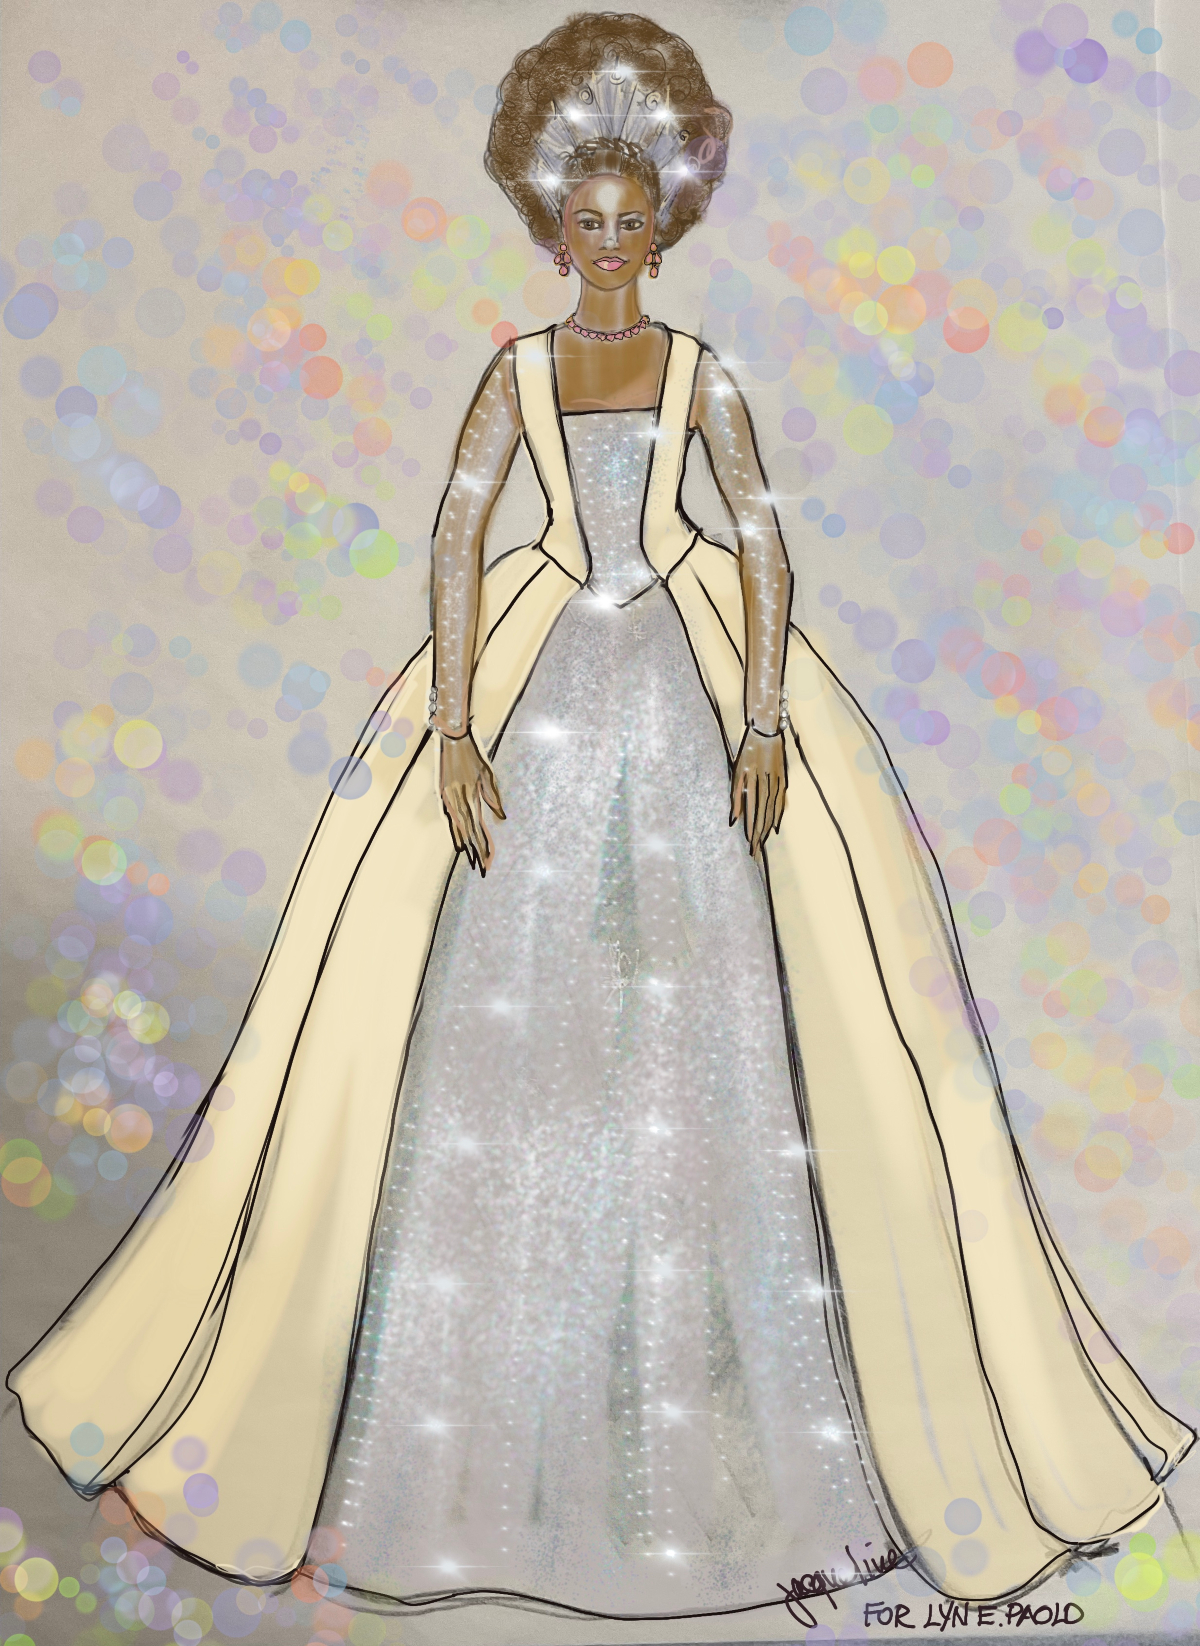 Allure Bridals is launching 'Bridgerton'-inspired wedding dresses